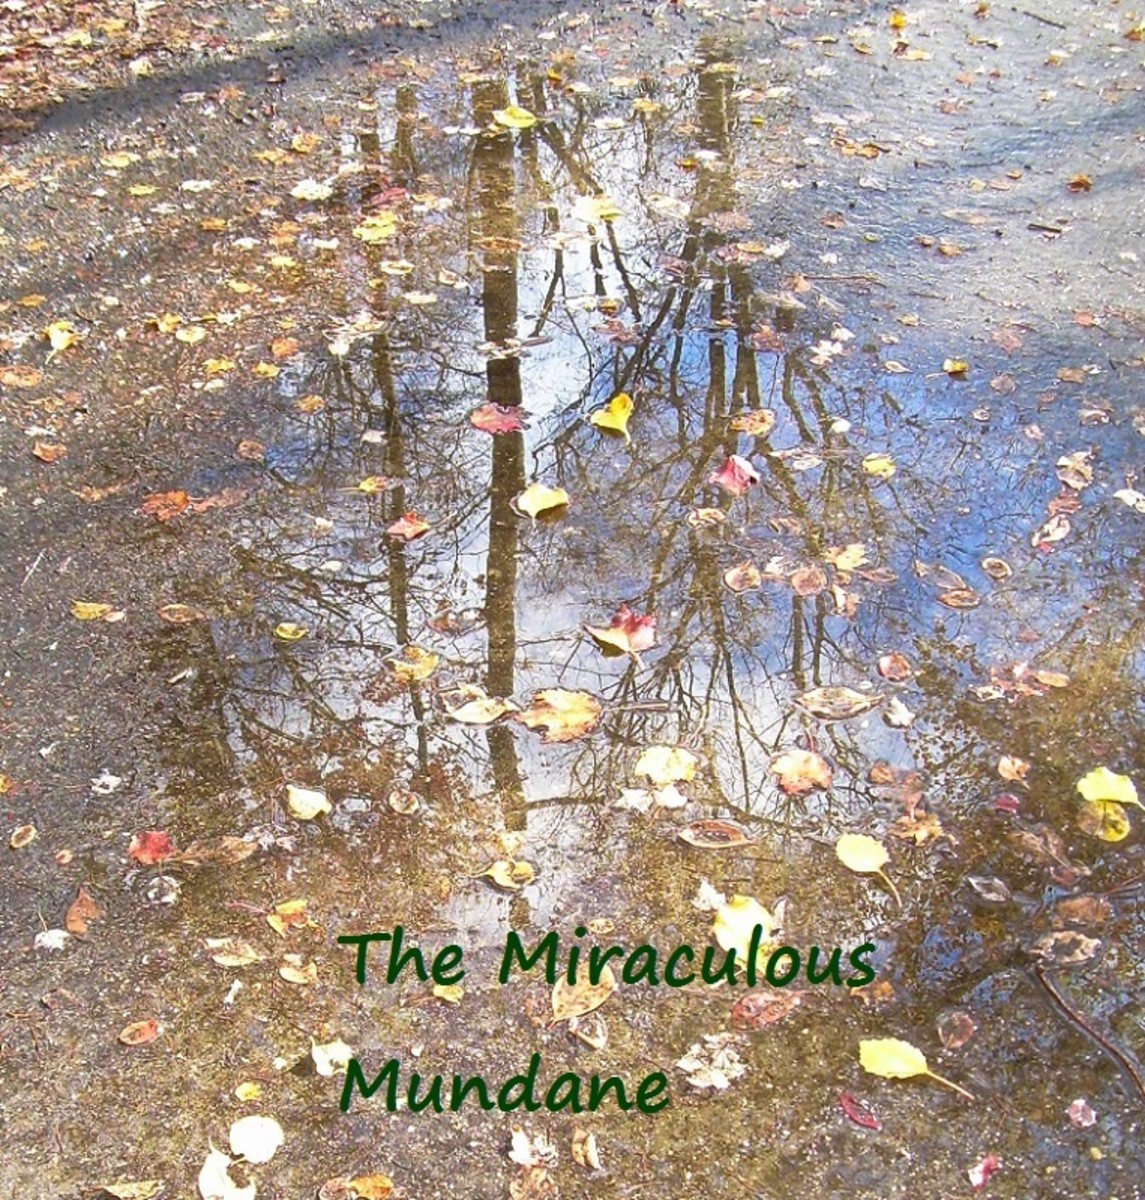 The Miraculous Mundane